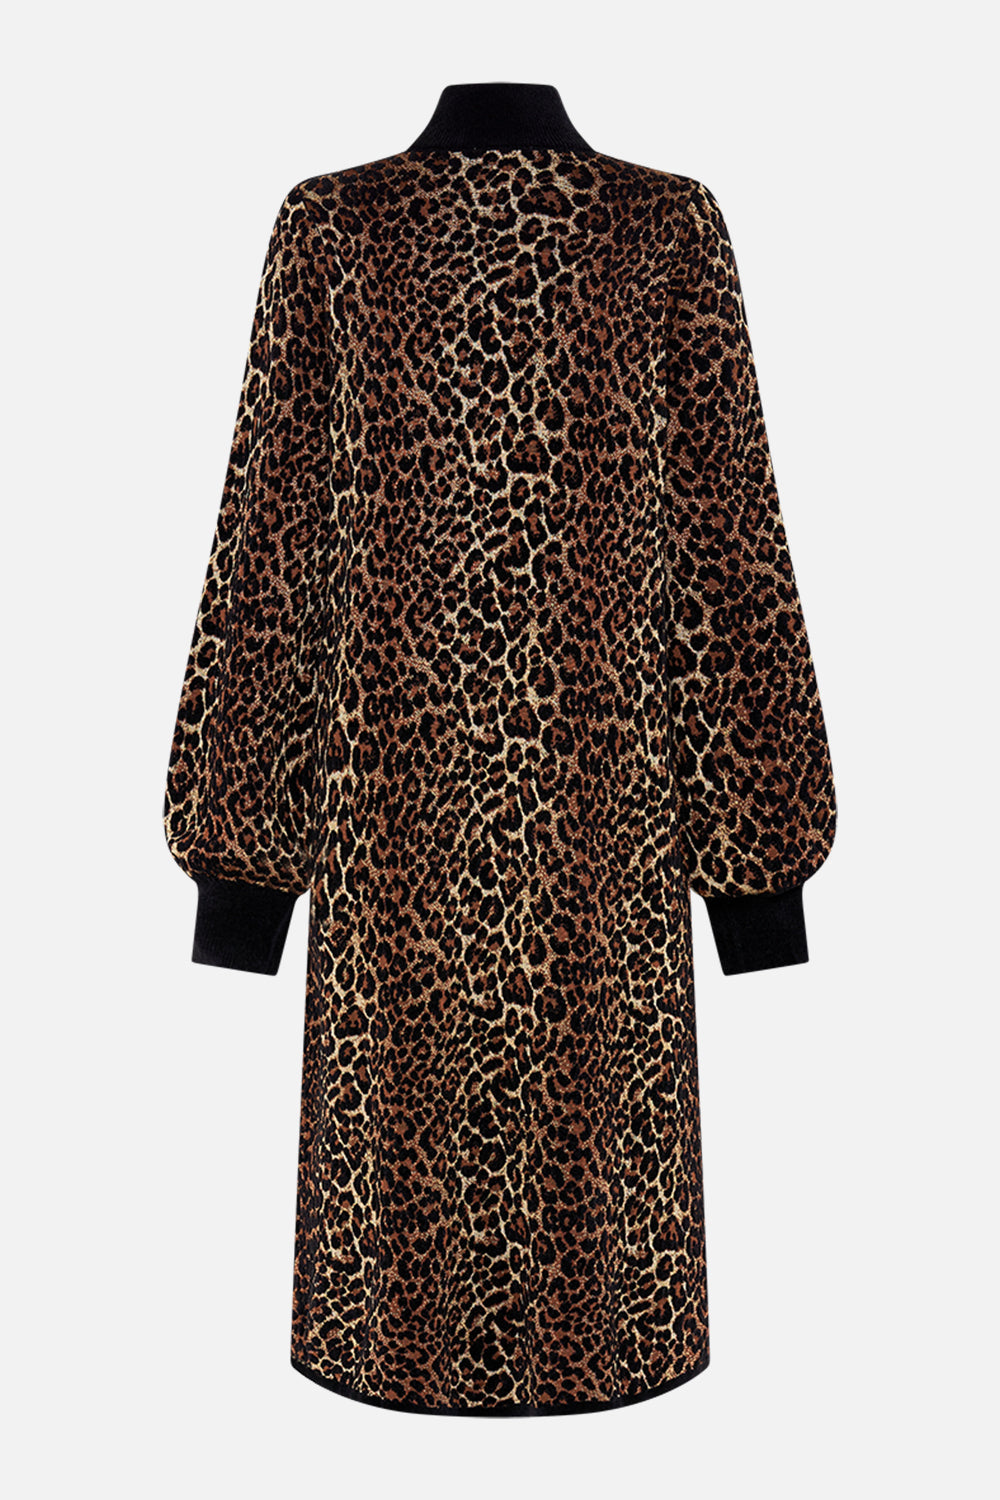 CAMILLA leopard A-line coat in Amsterglam print.